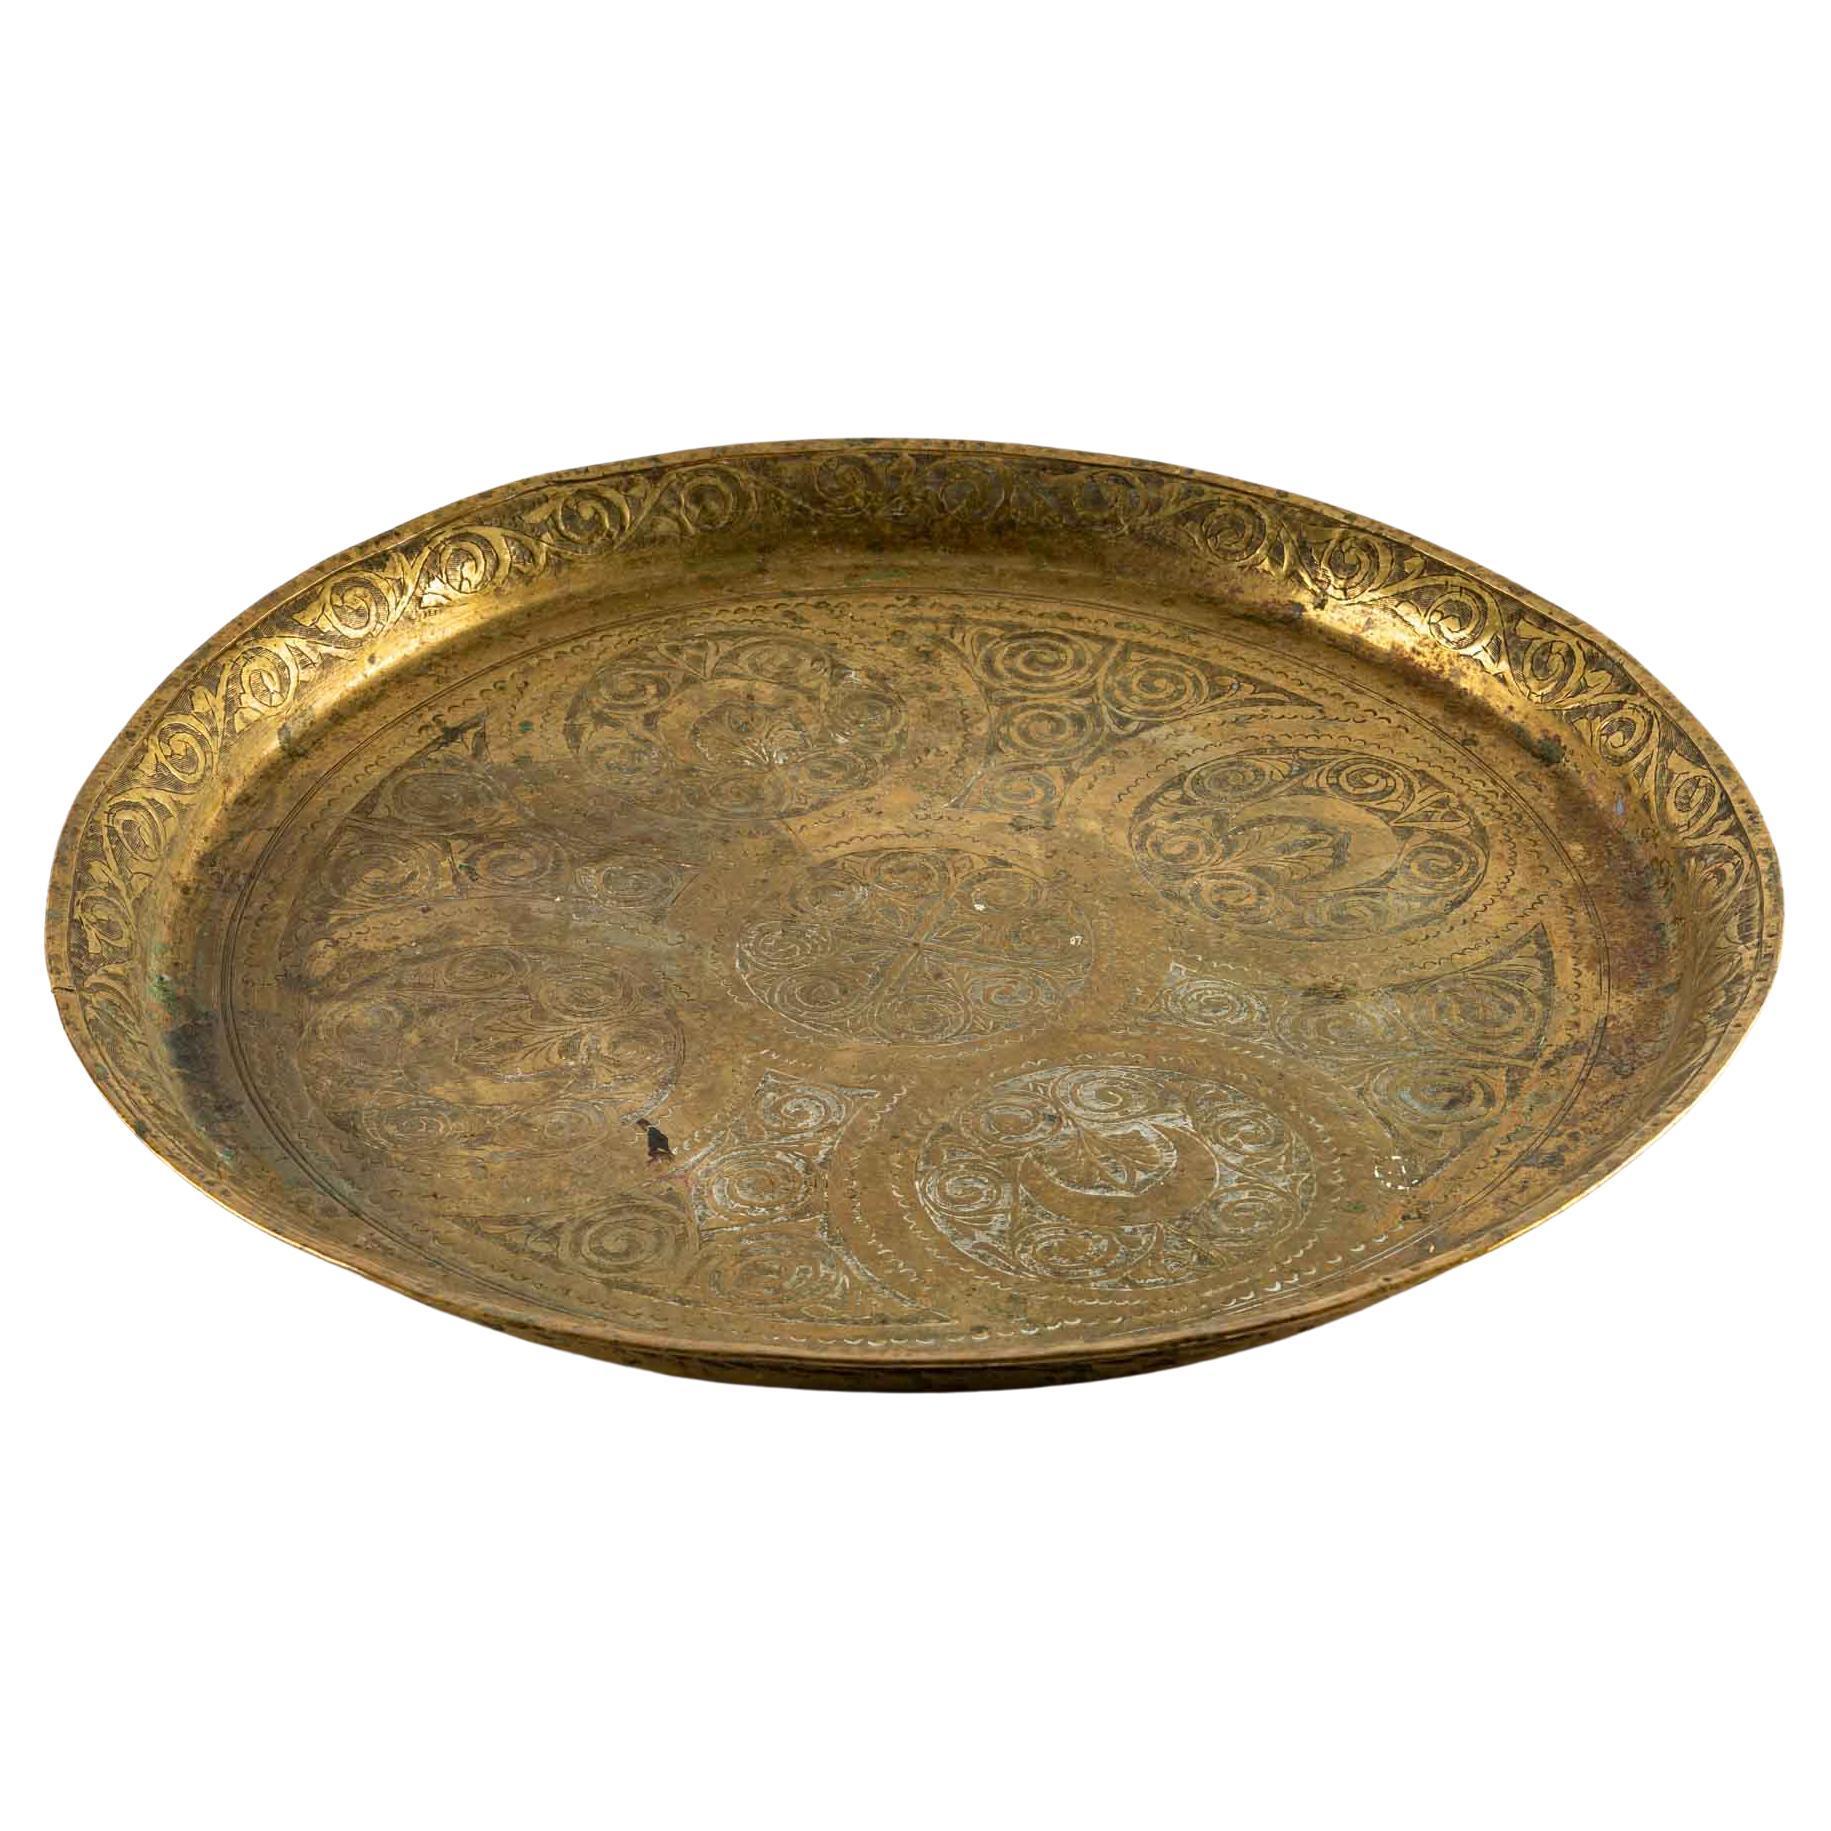 Antique copper tray, 19th century Syrian work.
Measures: D: 40 cm, d: 3 cm.